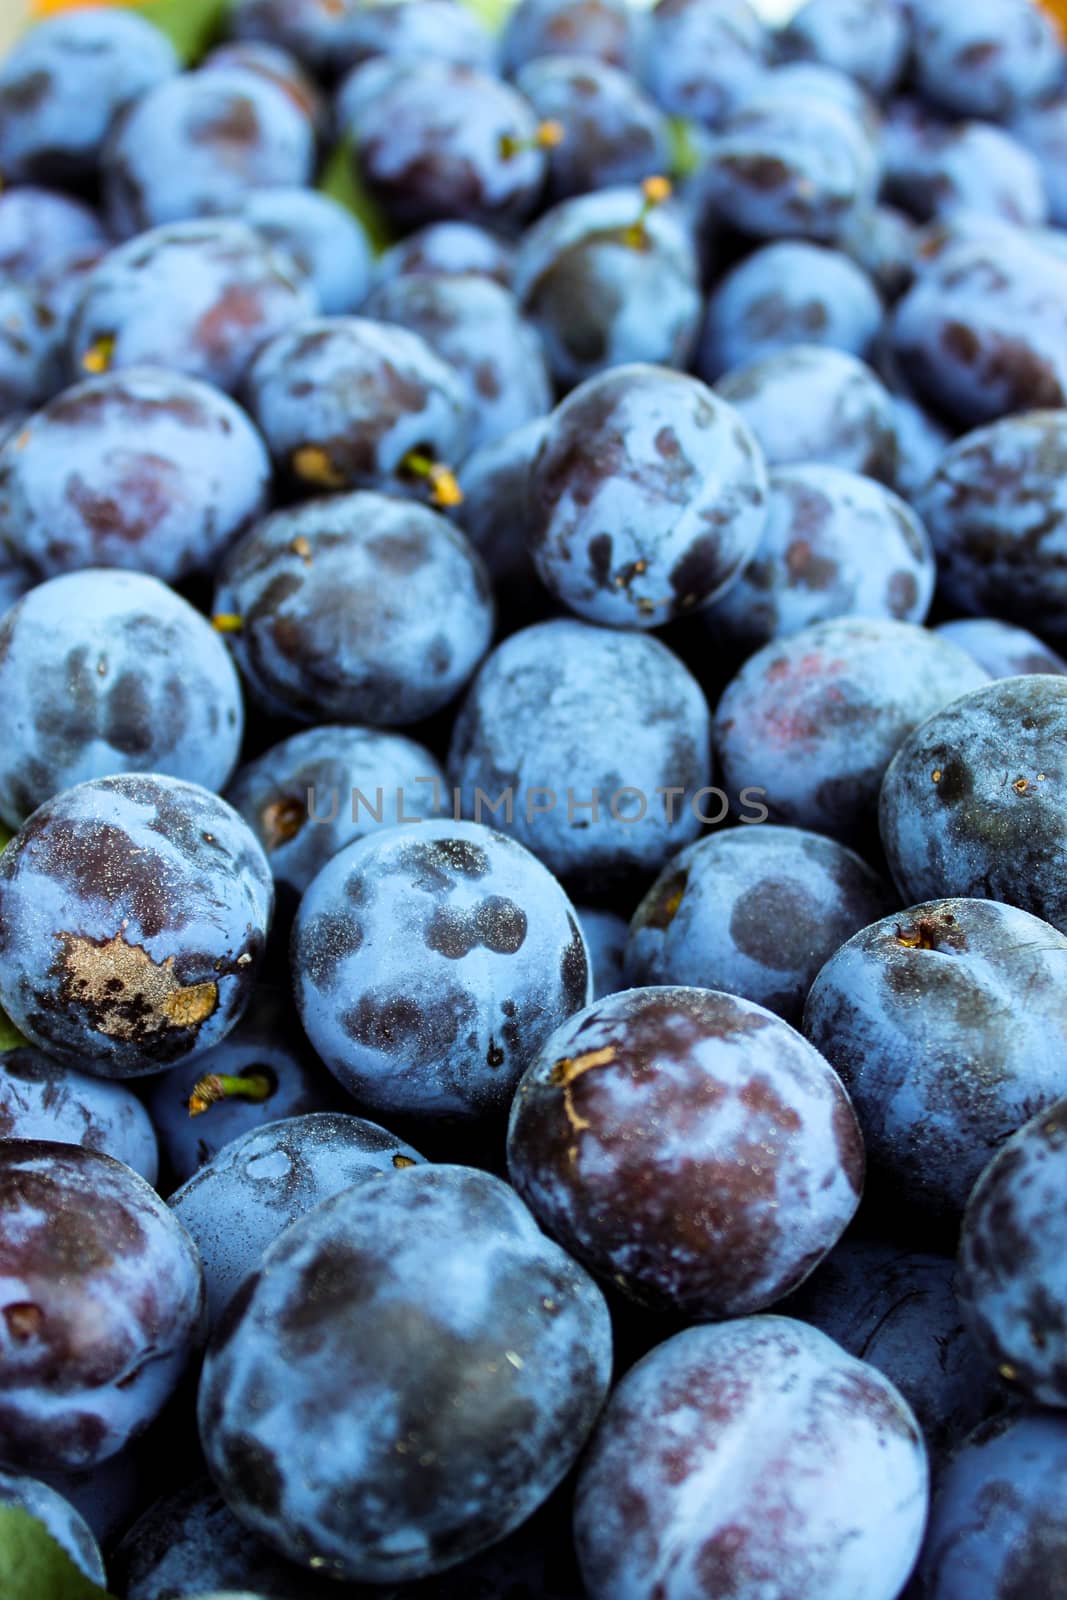 Vertical shot of blue plums. Fruits of prunus domestica. Zavidovici, Bosnia and Herzegovina.